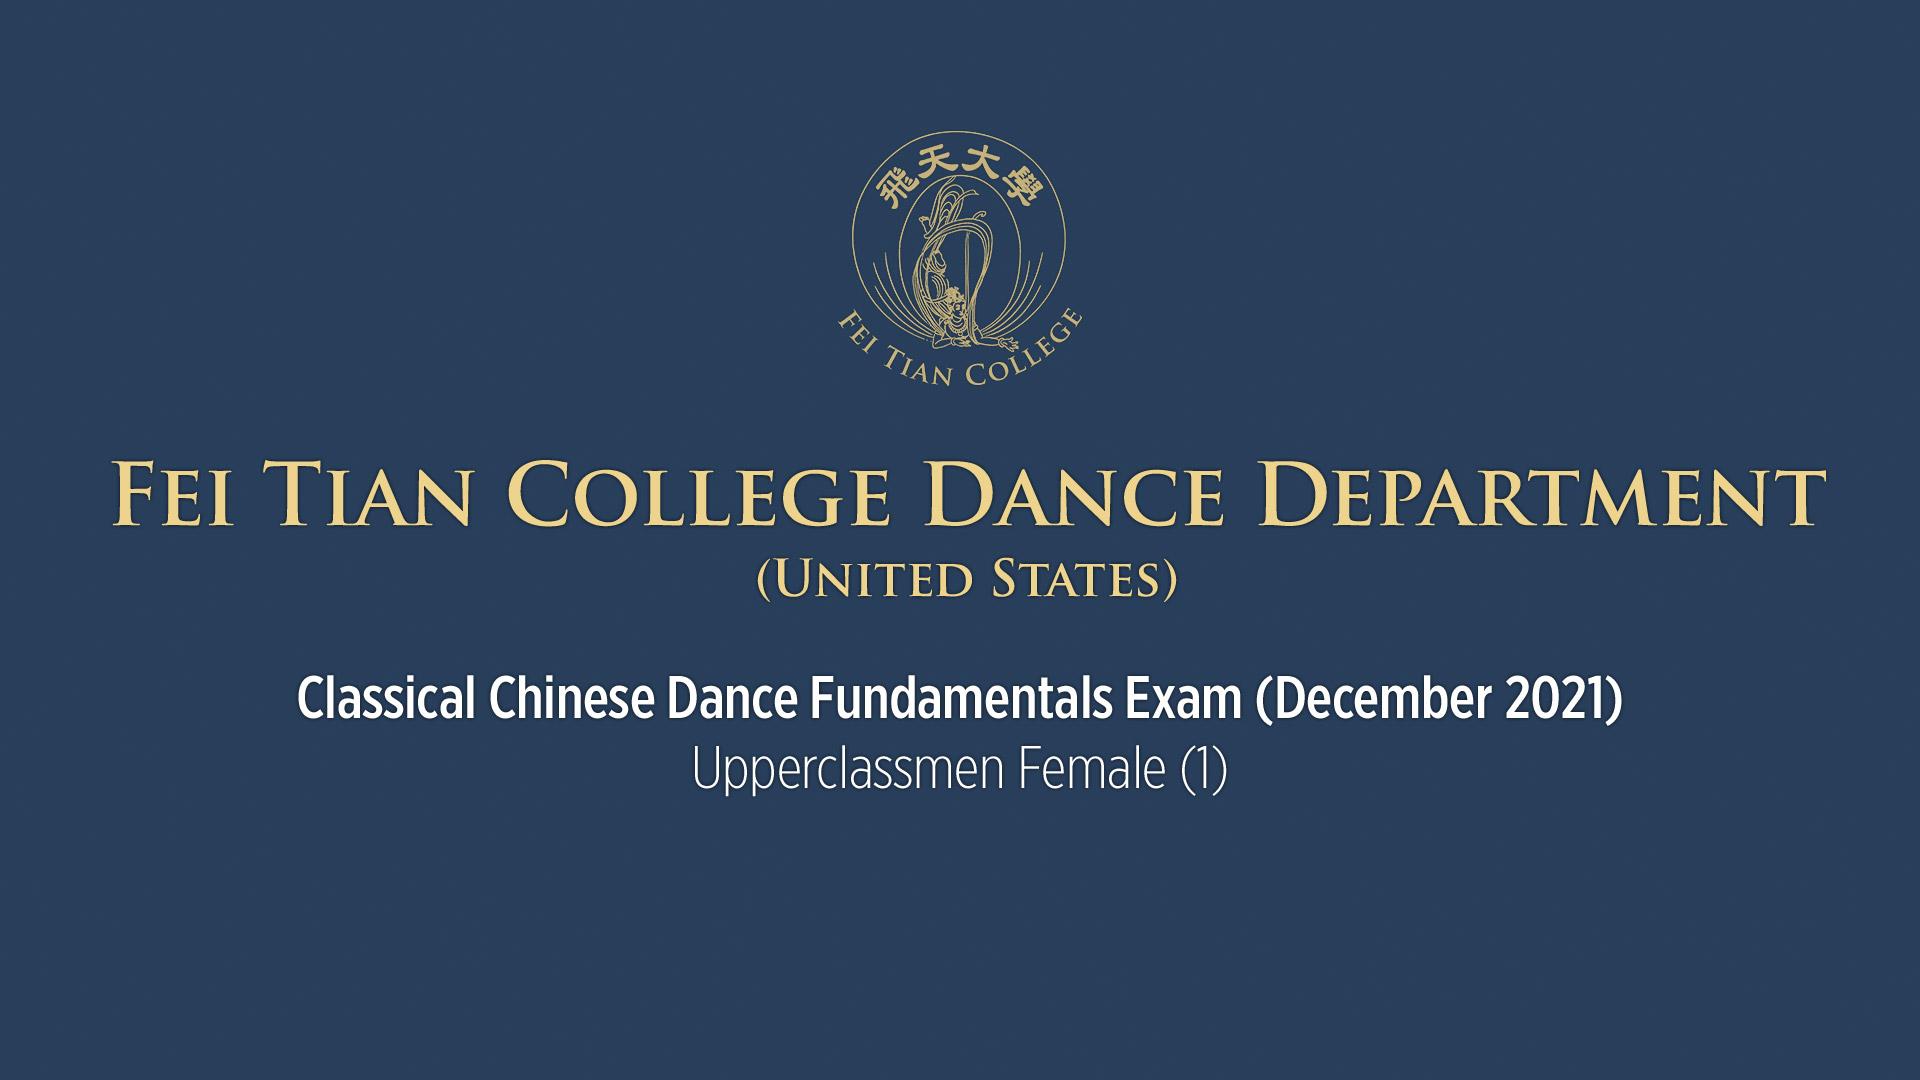 Fei Tian College Dance Department Classical Chinese Dance Fundamentals Exam, Upperclassmen Female (1), Dec. 2021